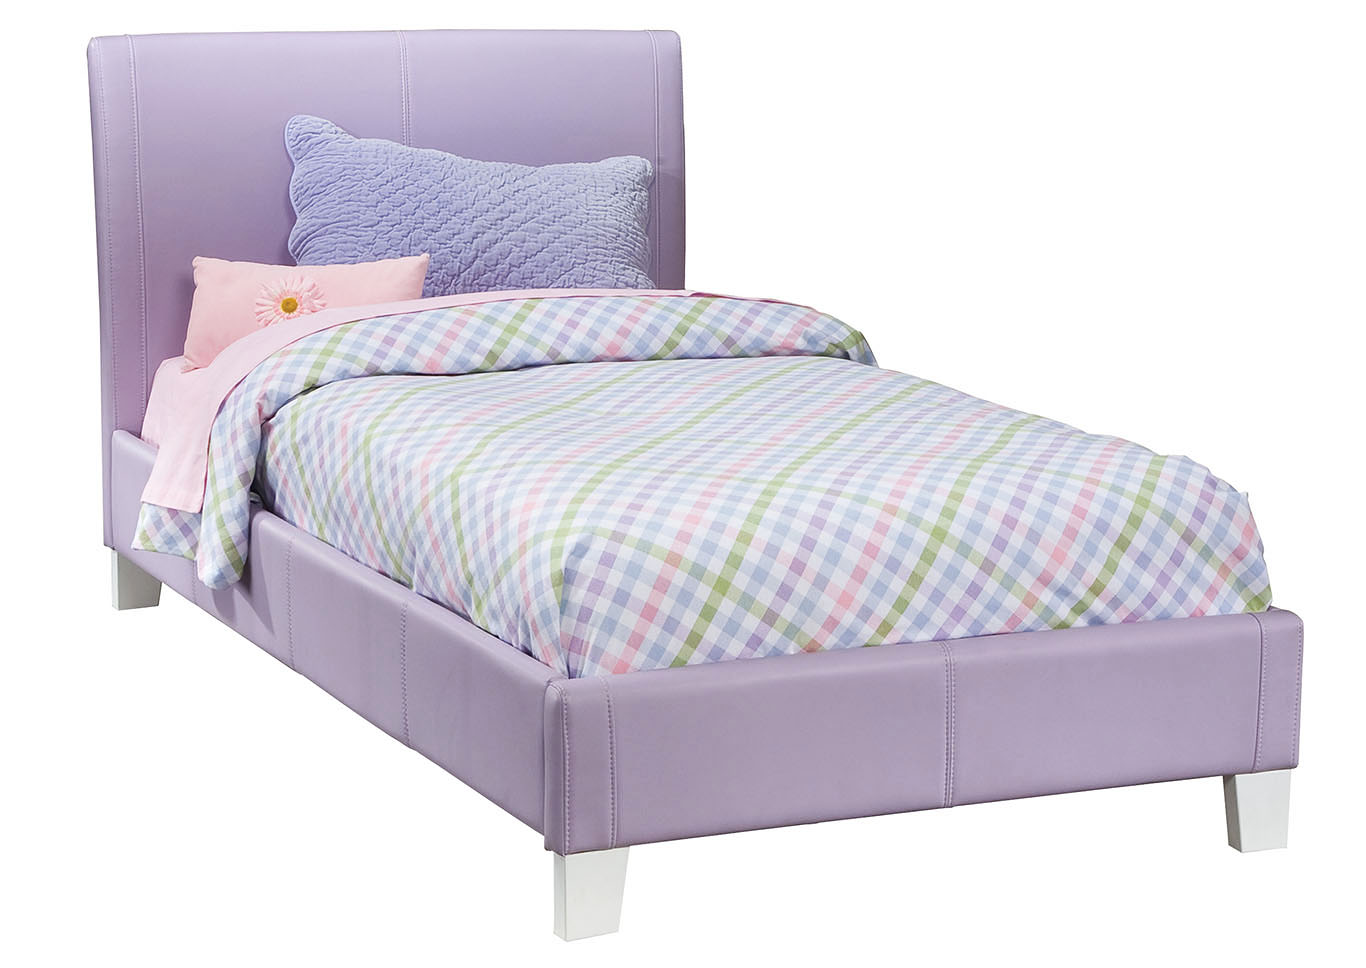 Fantasia Lavender Full Upholstered Bed,Standard